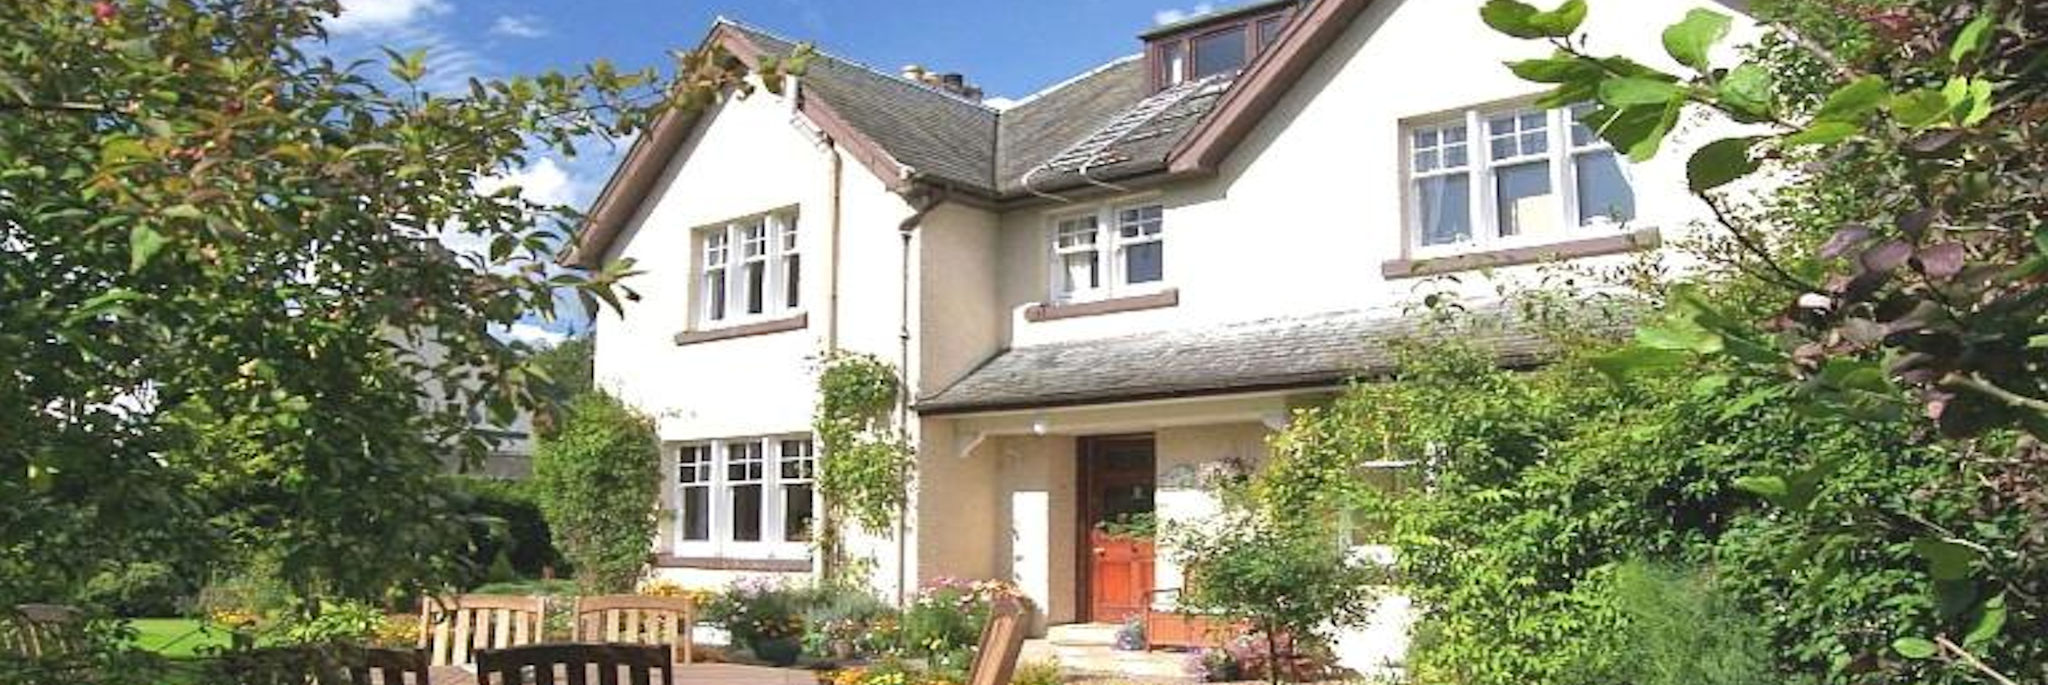 Dalgreine Guest House, Blair Atholl, Perthshire